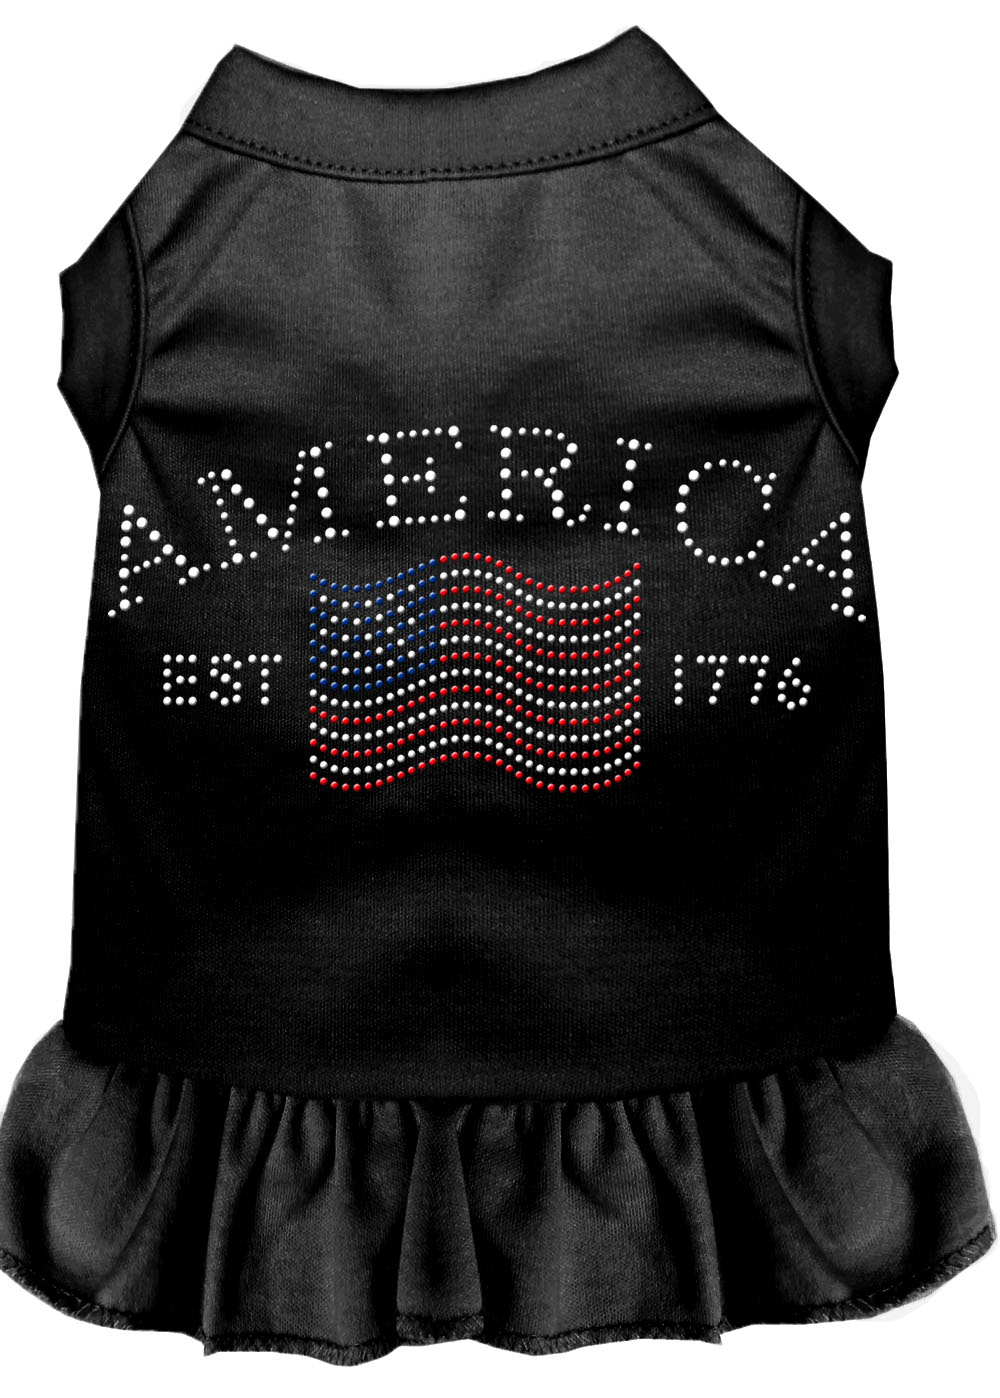 Classic America Rhinestone Dress Black 4X